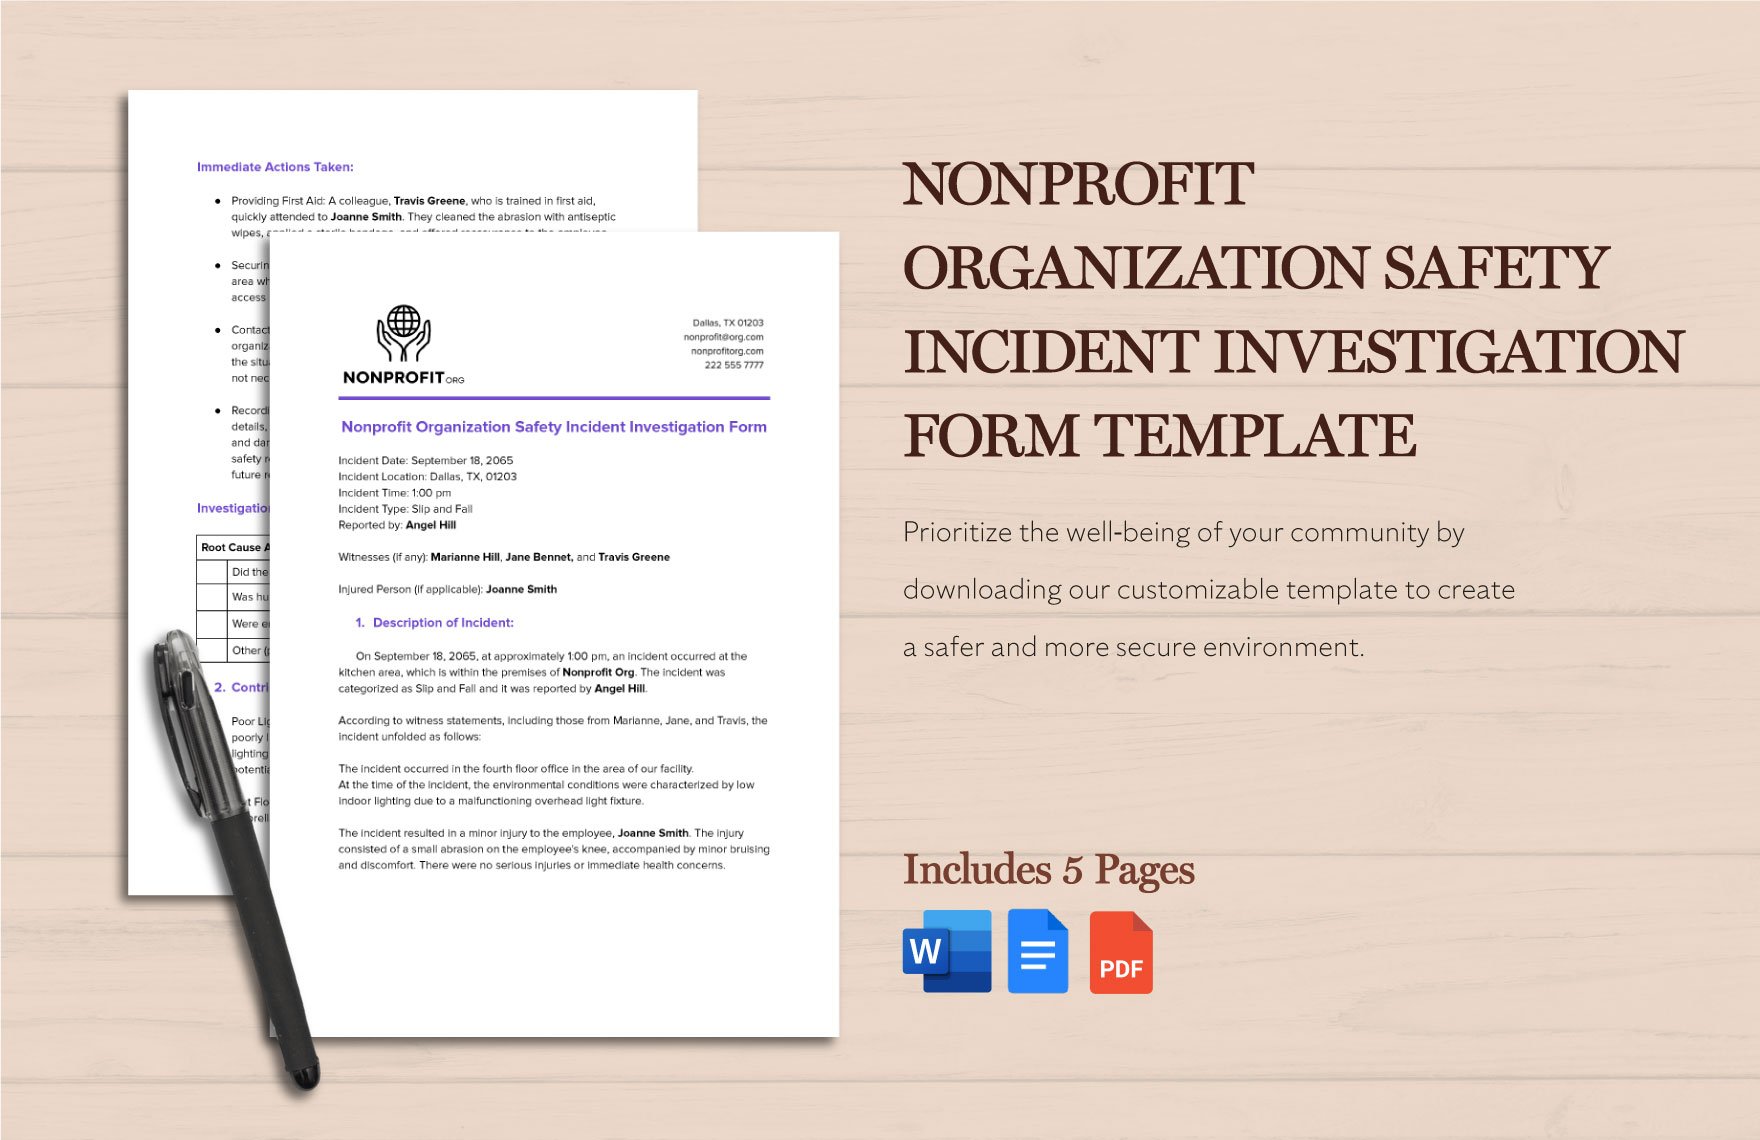 Nonprofit Organization Safety Incident Investigation Form Template